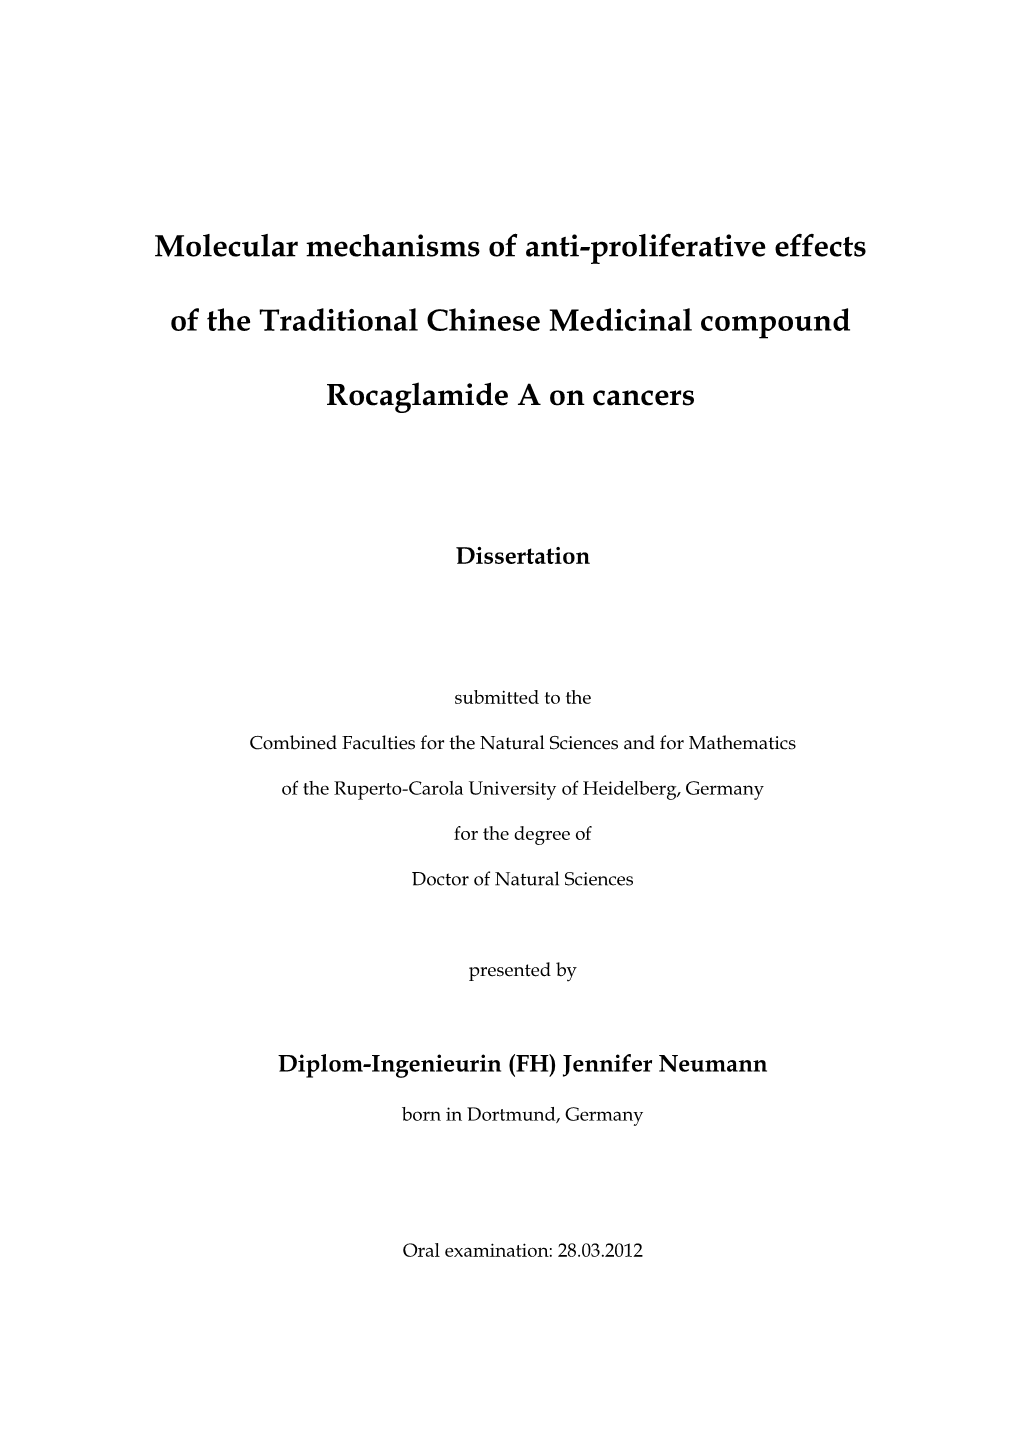 Molecular Mechanisms of Anti-Proliferative Effects of The